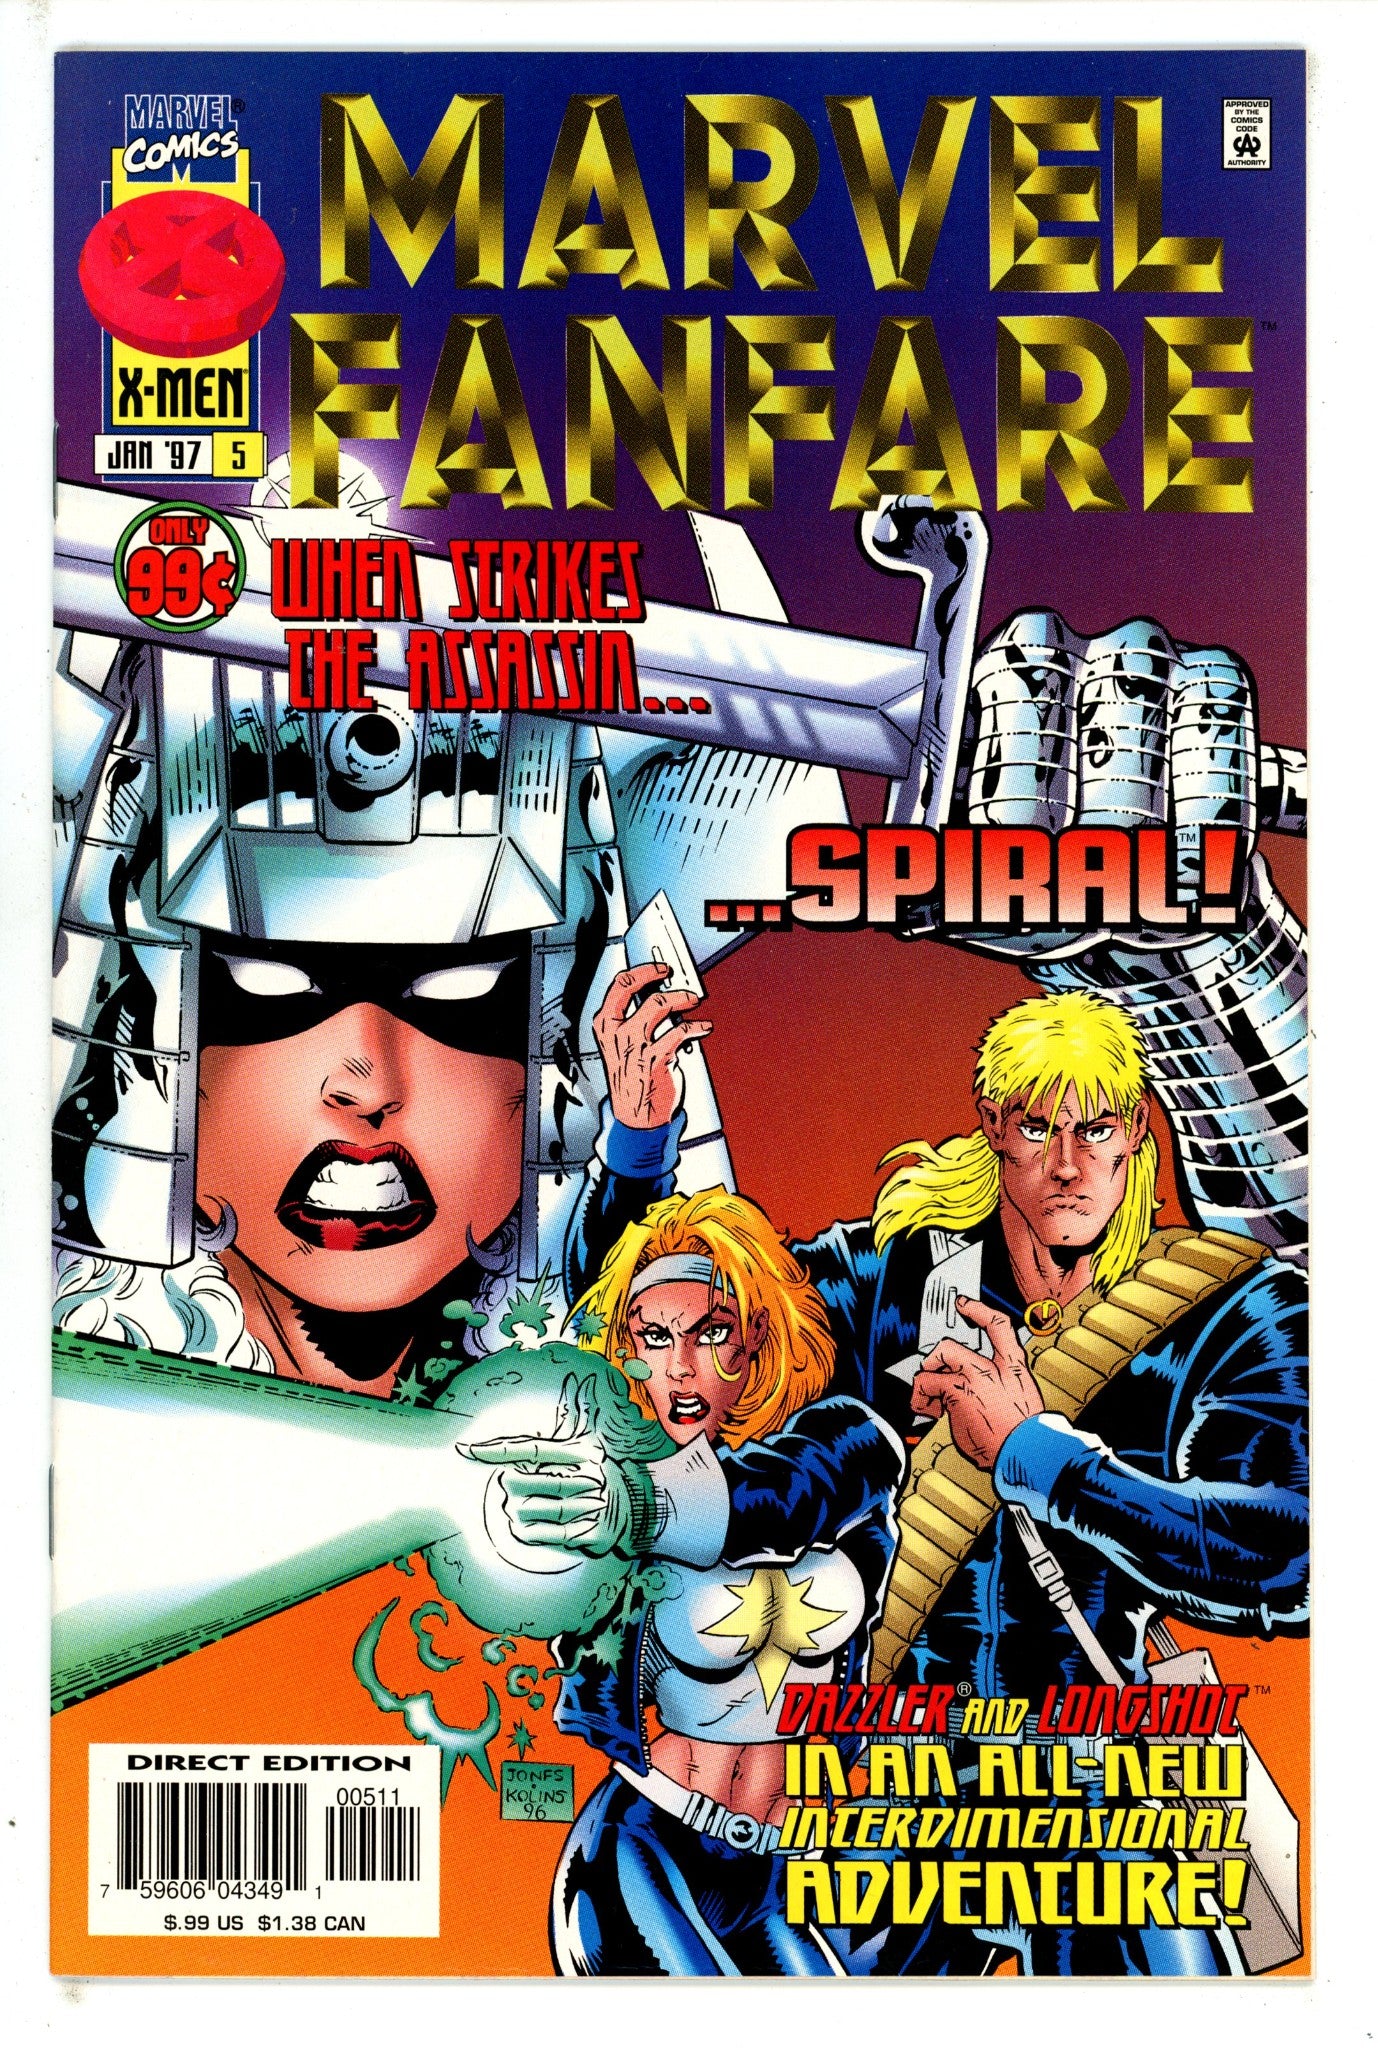 Marvel Fanfare Vol 2 5 (1997)